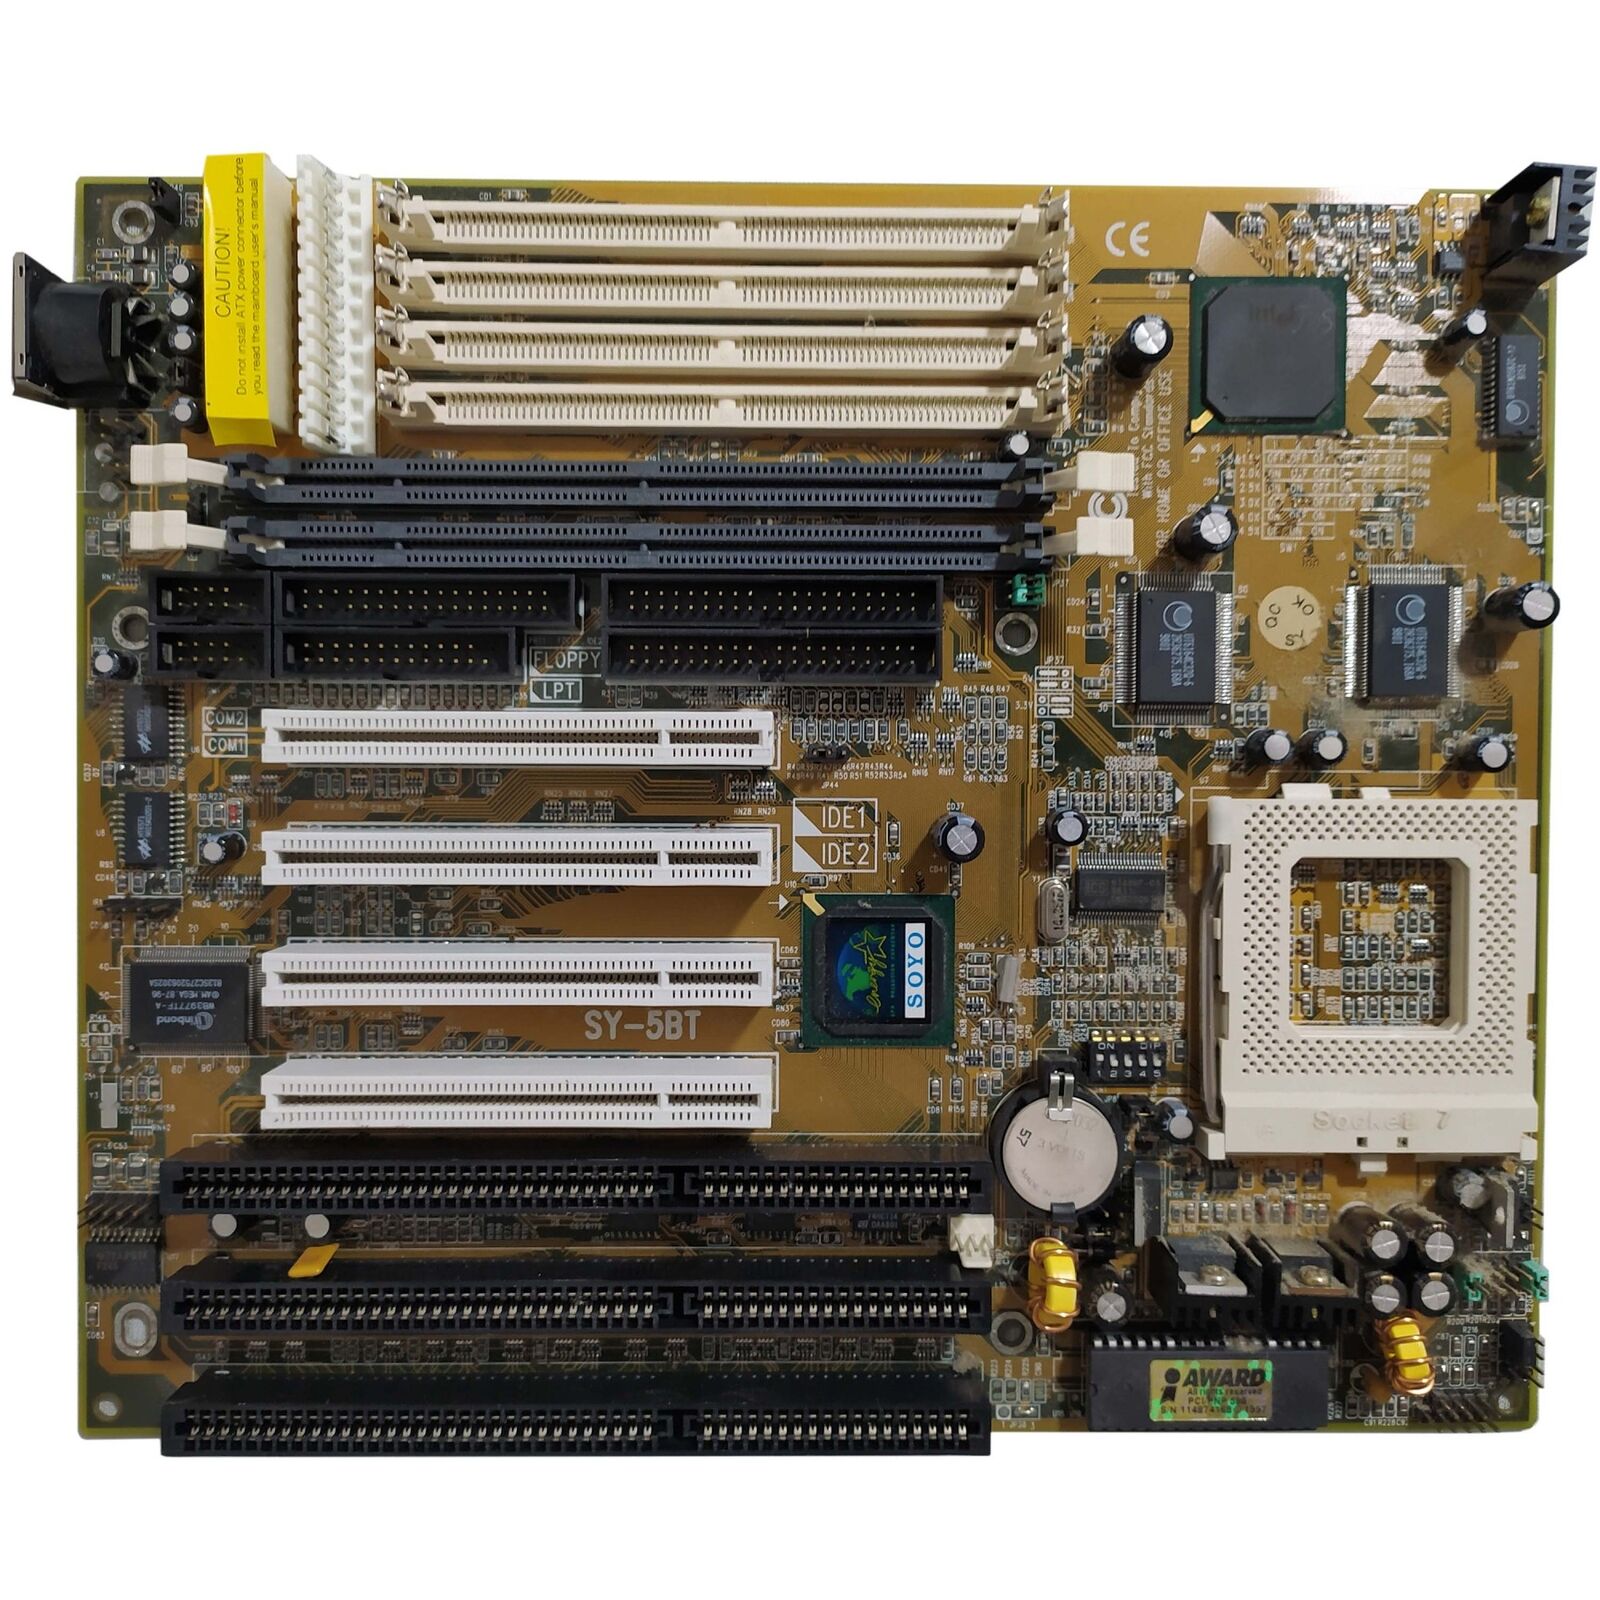 Motherboard SOYO SY-5BT Socket 7 PGA321 Mmx AMD K5 K6 Isa Sdram Rdram PCI